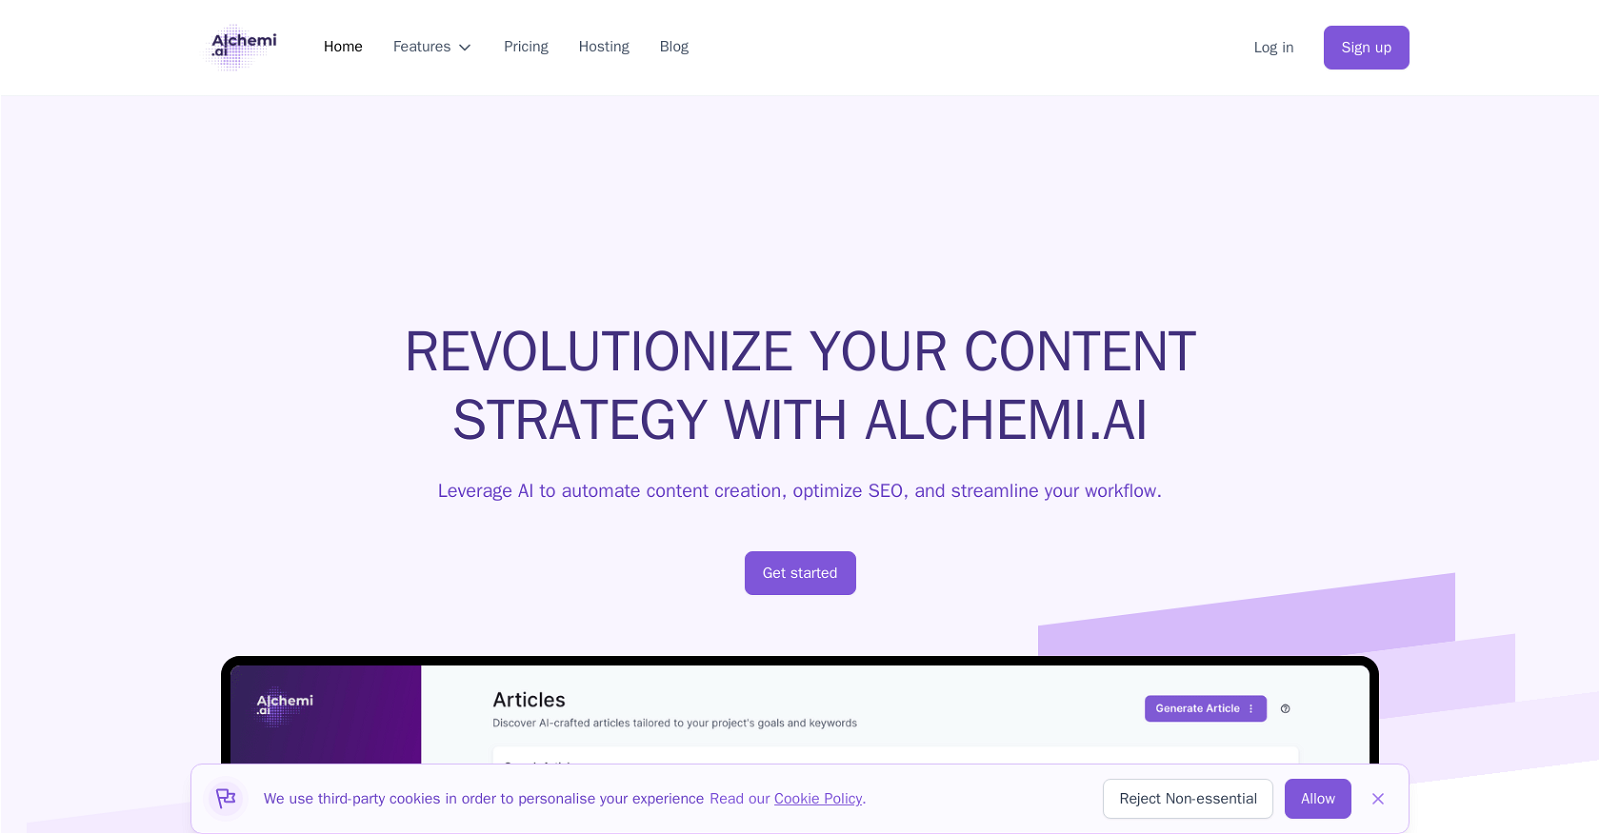 Alchemi website